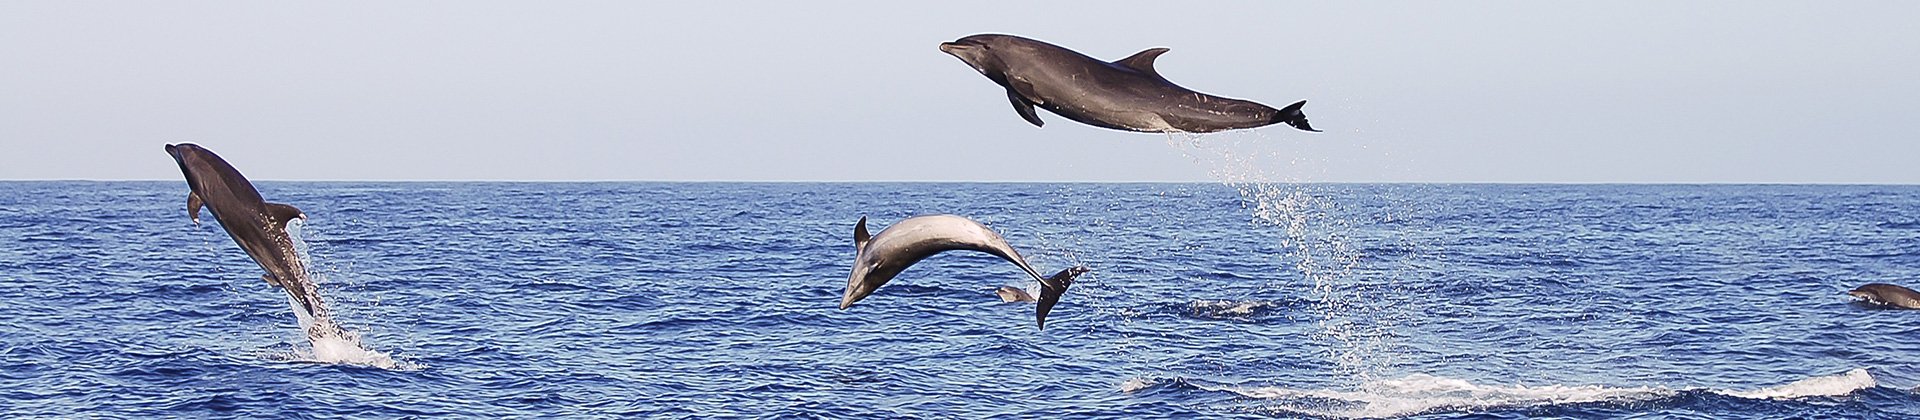 Dolphins Galapagos